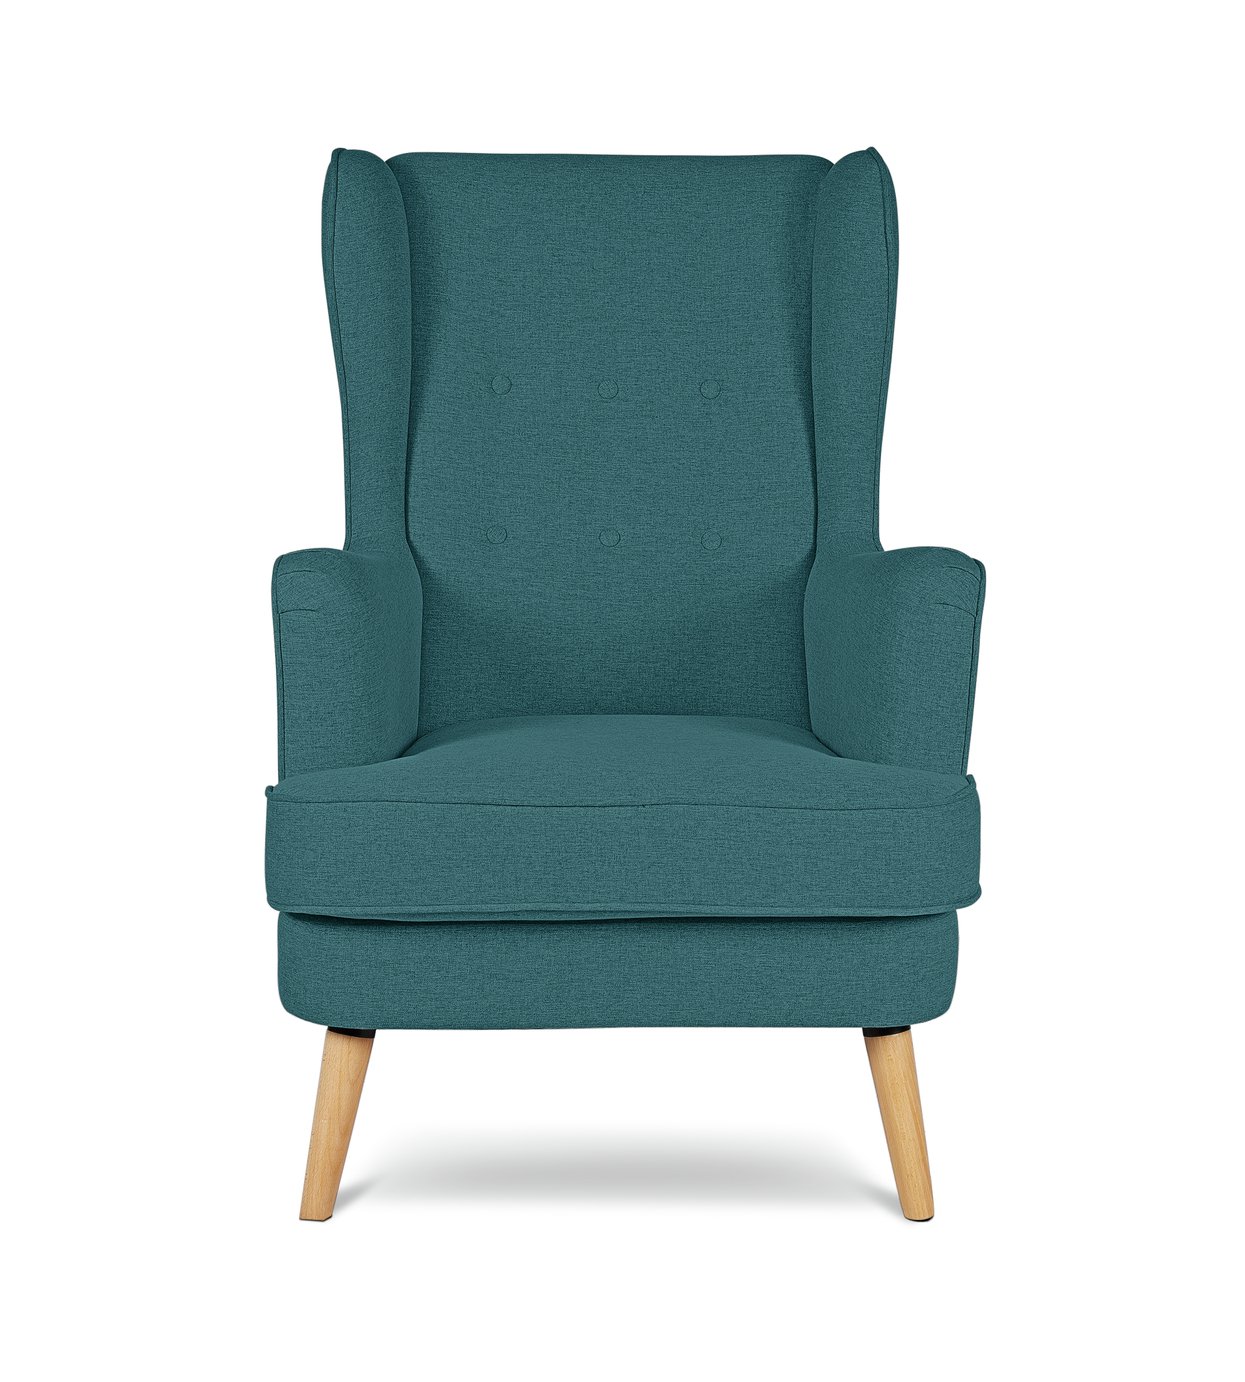 Habitat Callie Fabric Wingback Chair - Teal